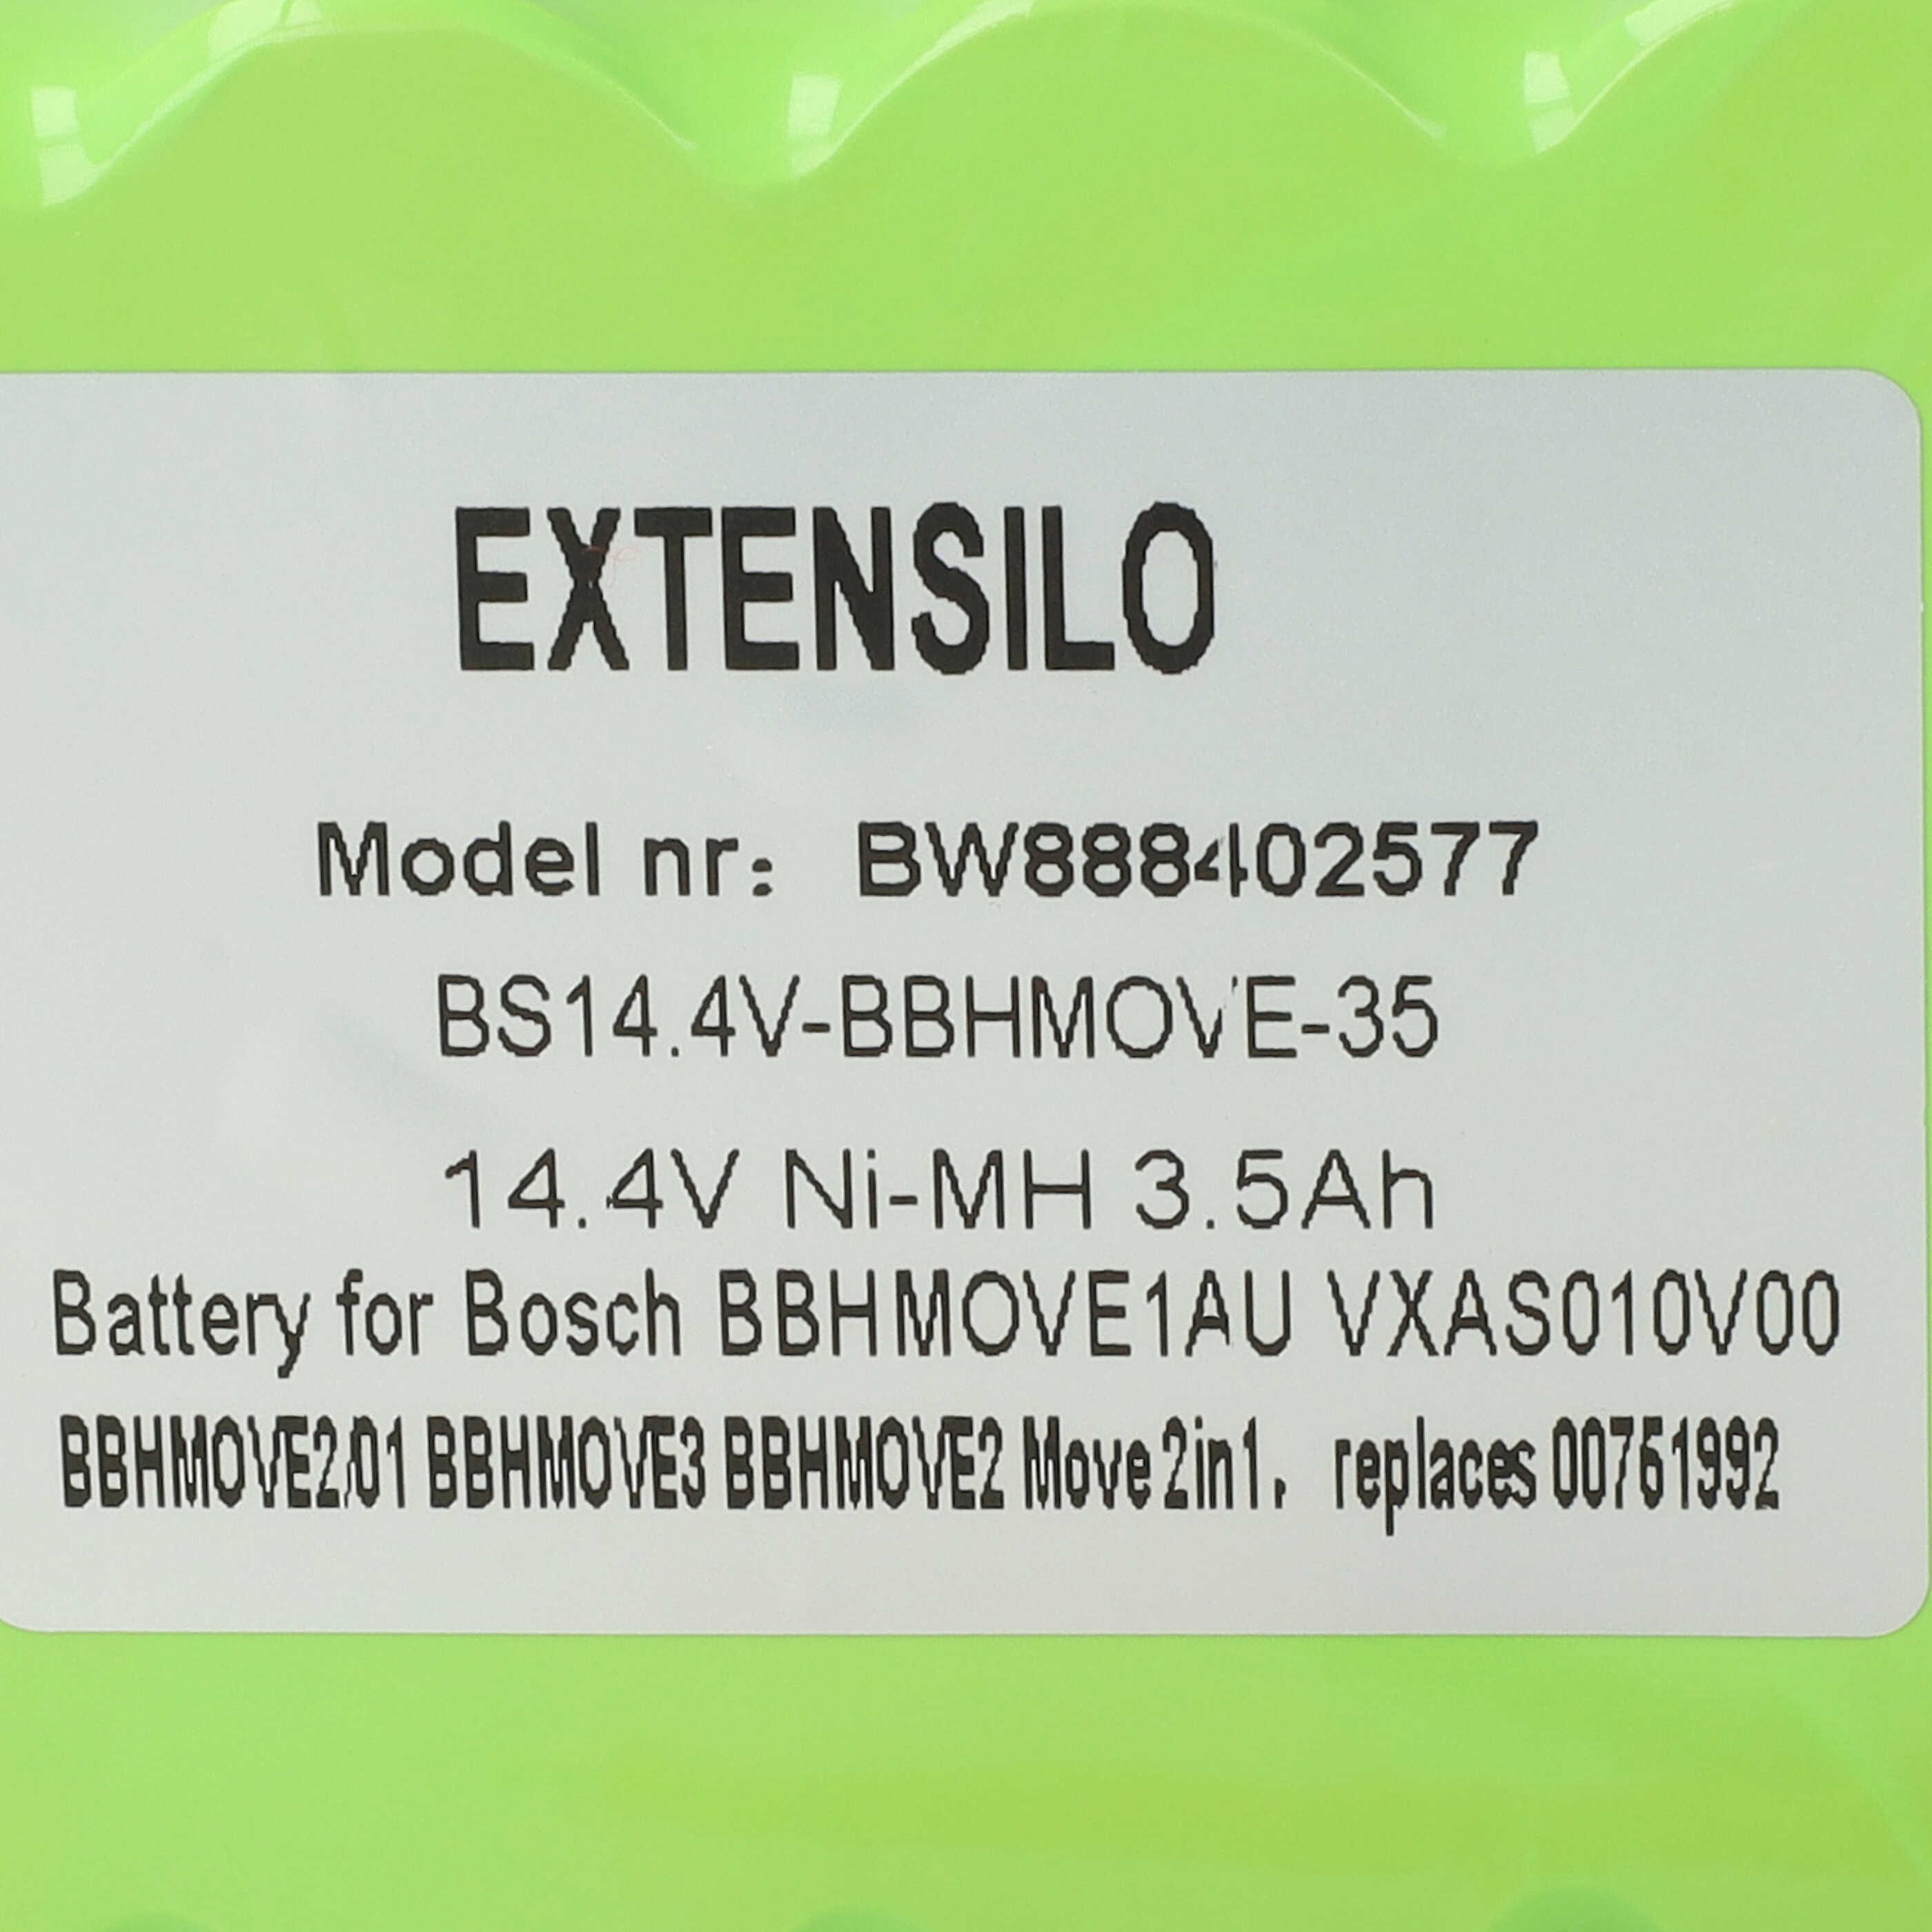 Batería reemplaza Bosch FD8901, GP180SCHSV12Y2H, 00751992 para aspiradora Bosch - 3500 mAh 14,4 V NiMH